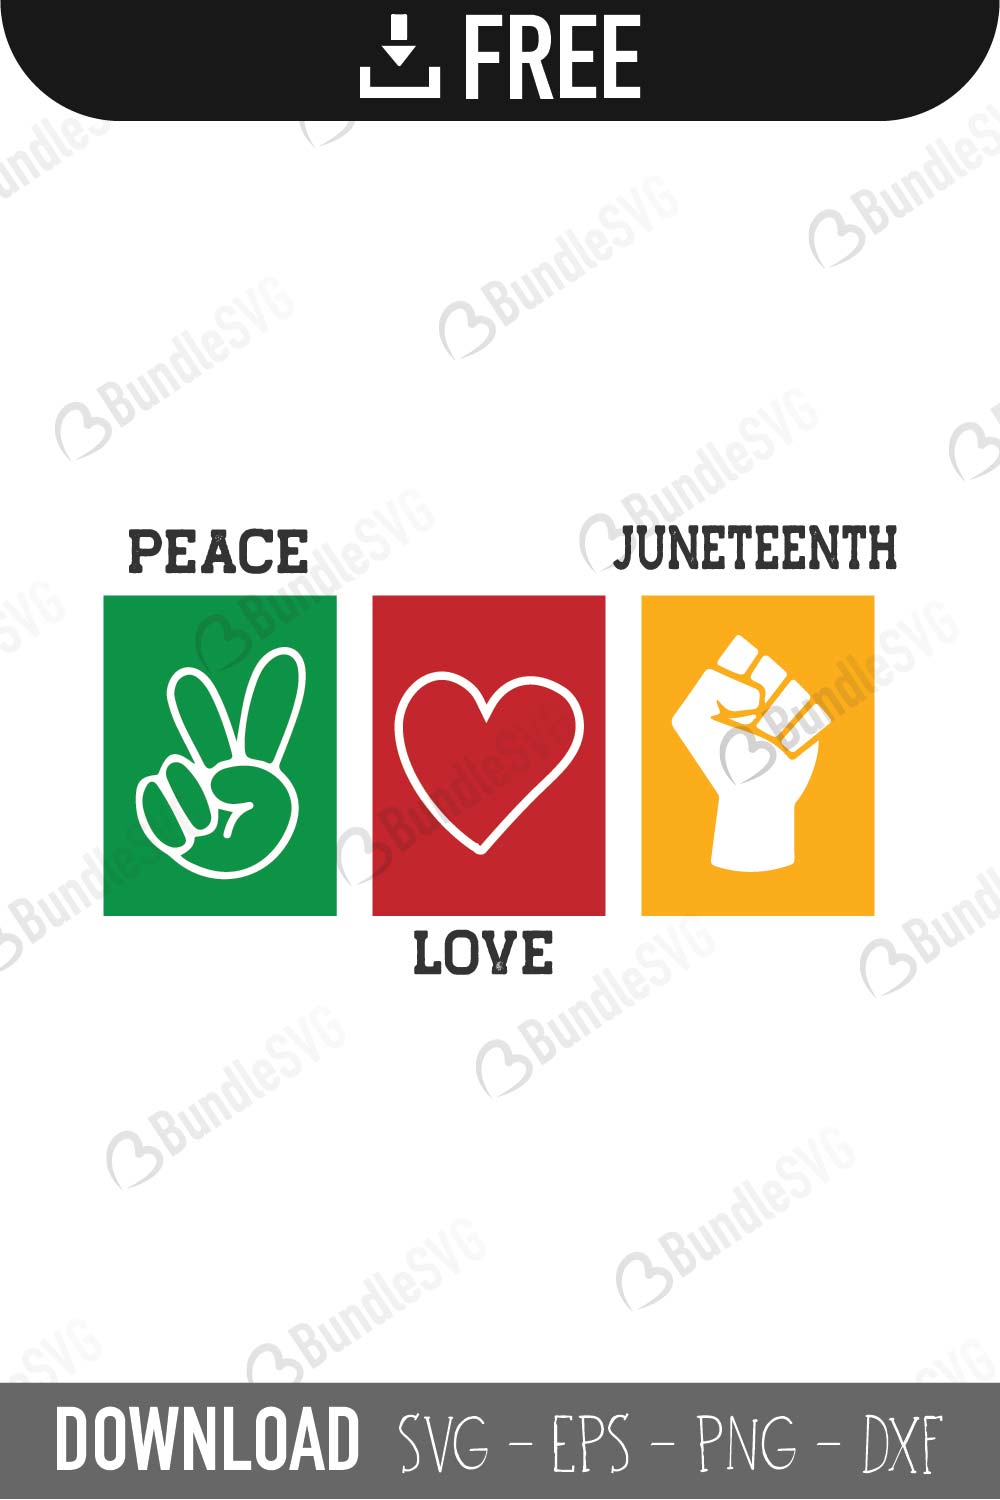 Download Peace Love Juneteenth Svg Cut Files Free Download Bundlesvg